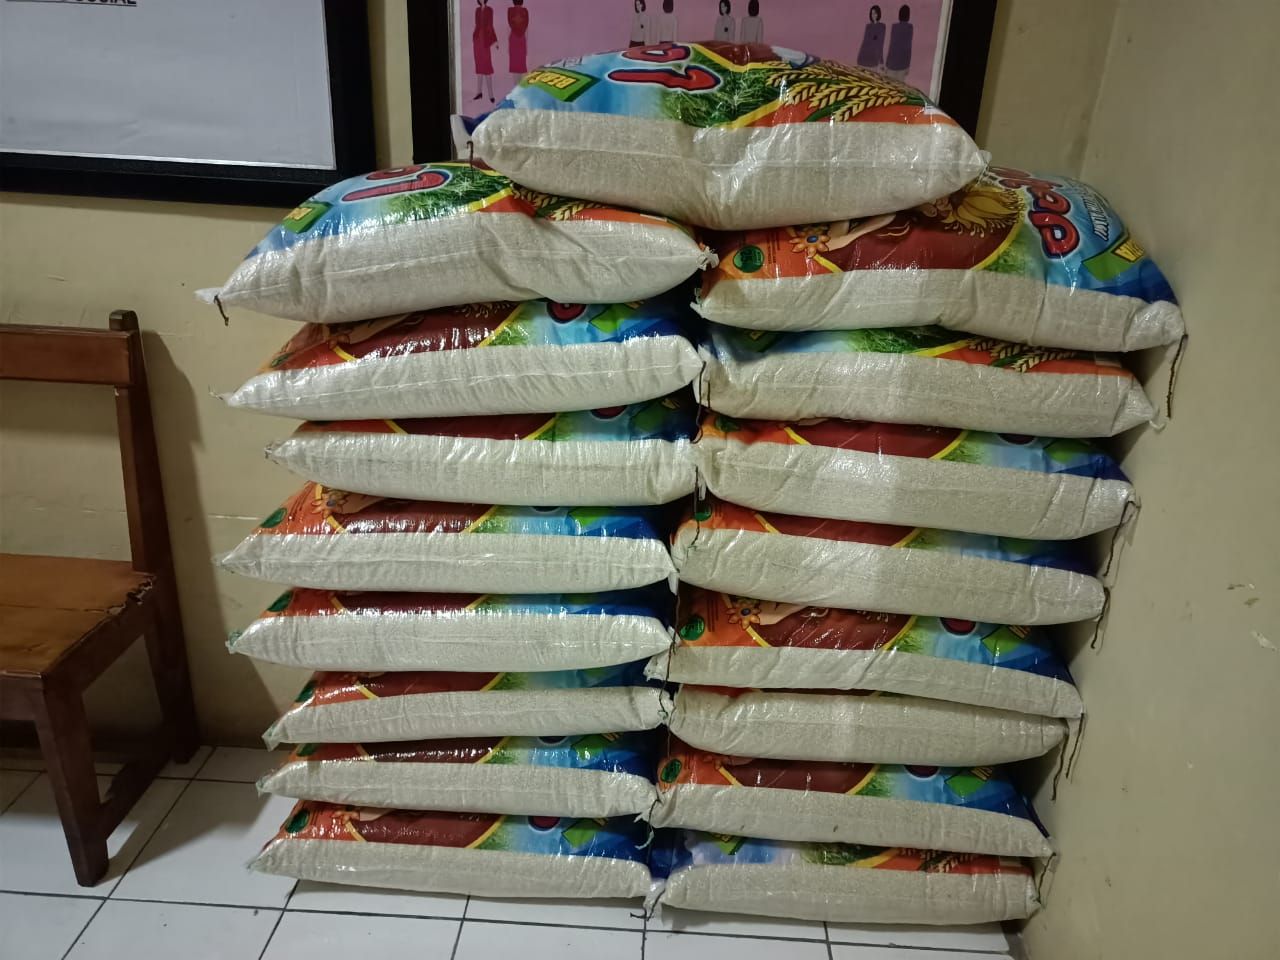 Barang bakti karyawan mencuri dua puluh karung beras.